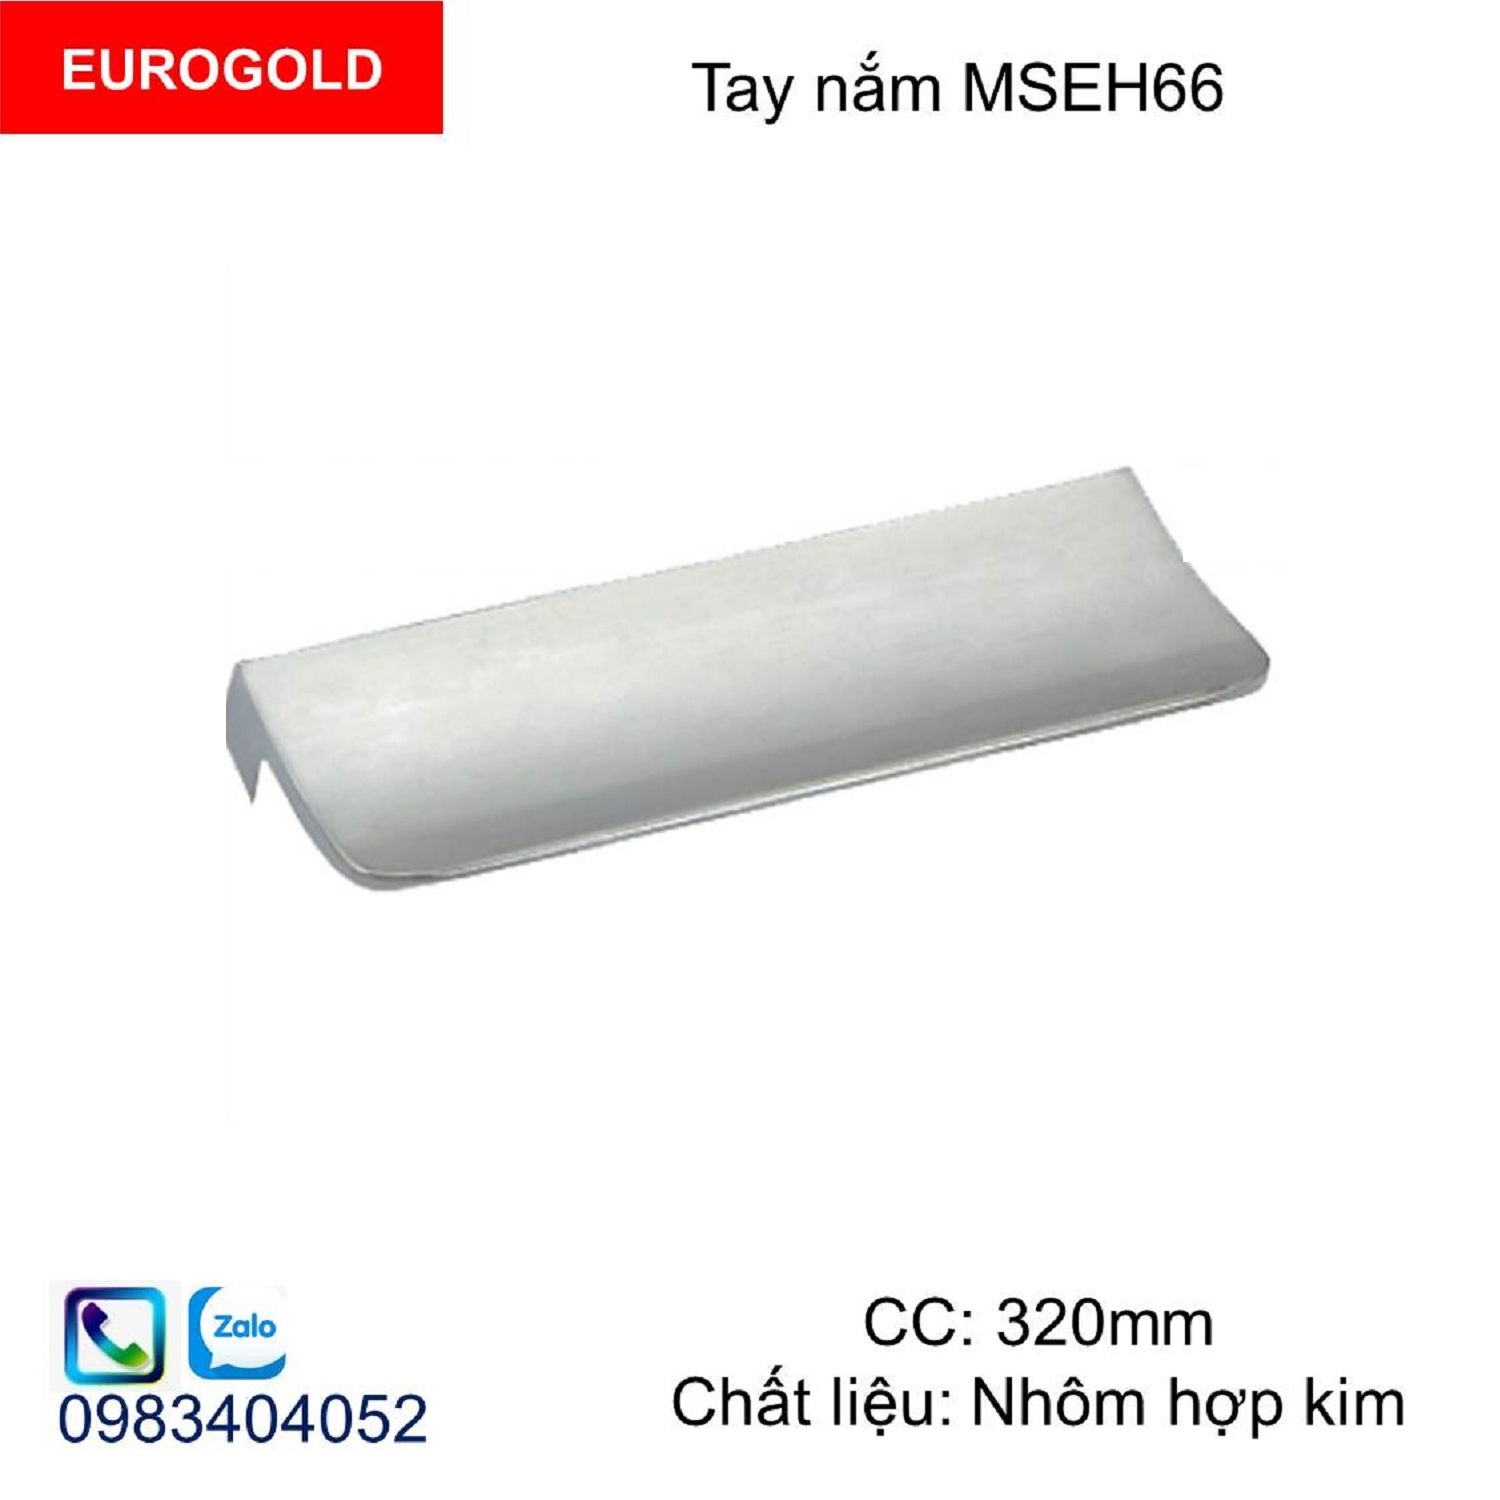 Tay nắm Eurogold MSEH66-320